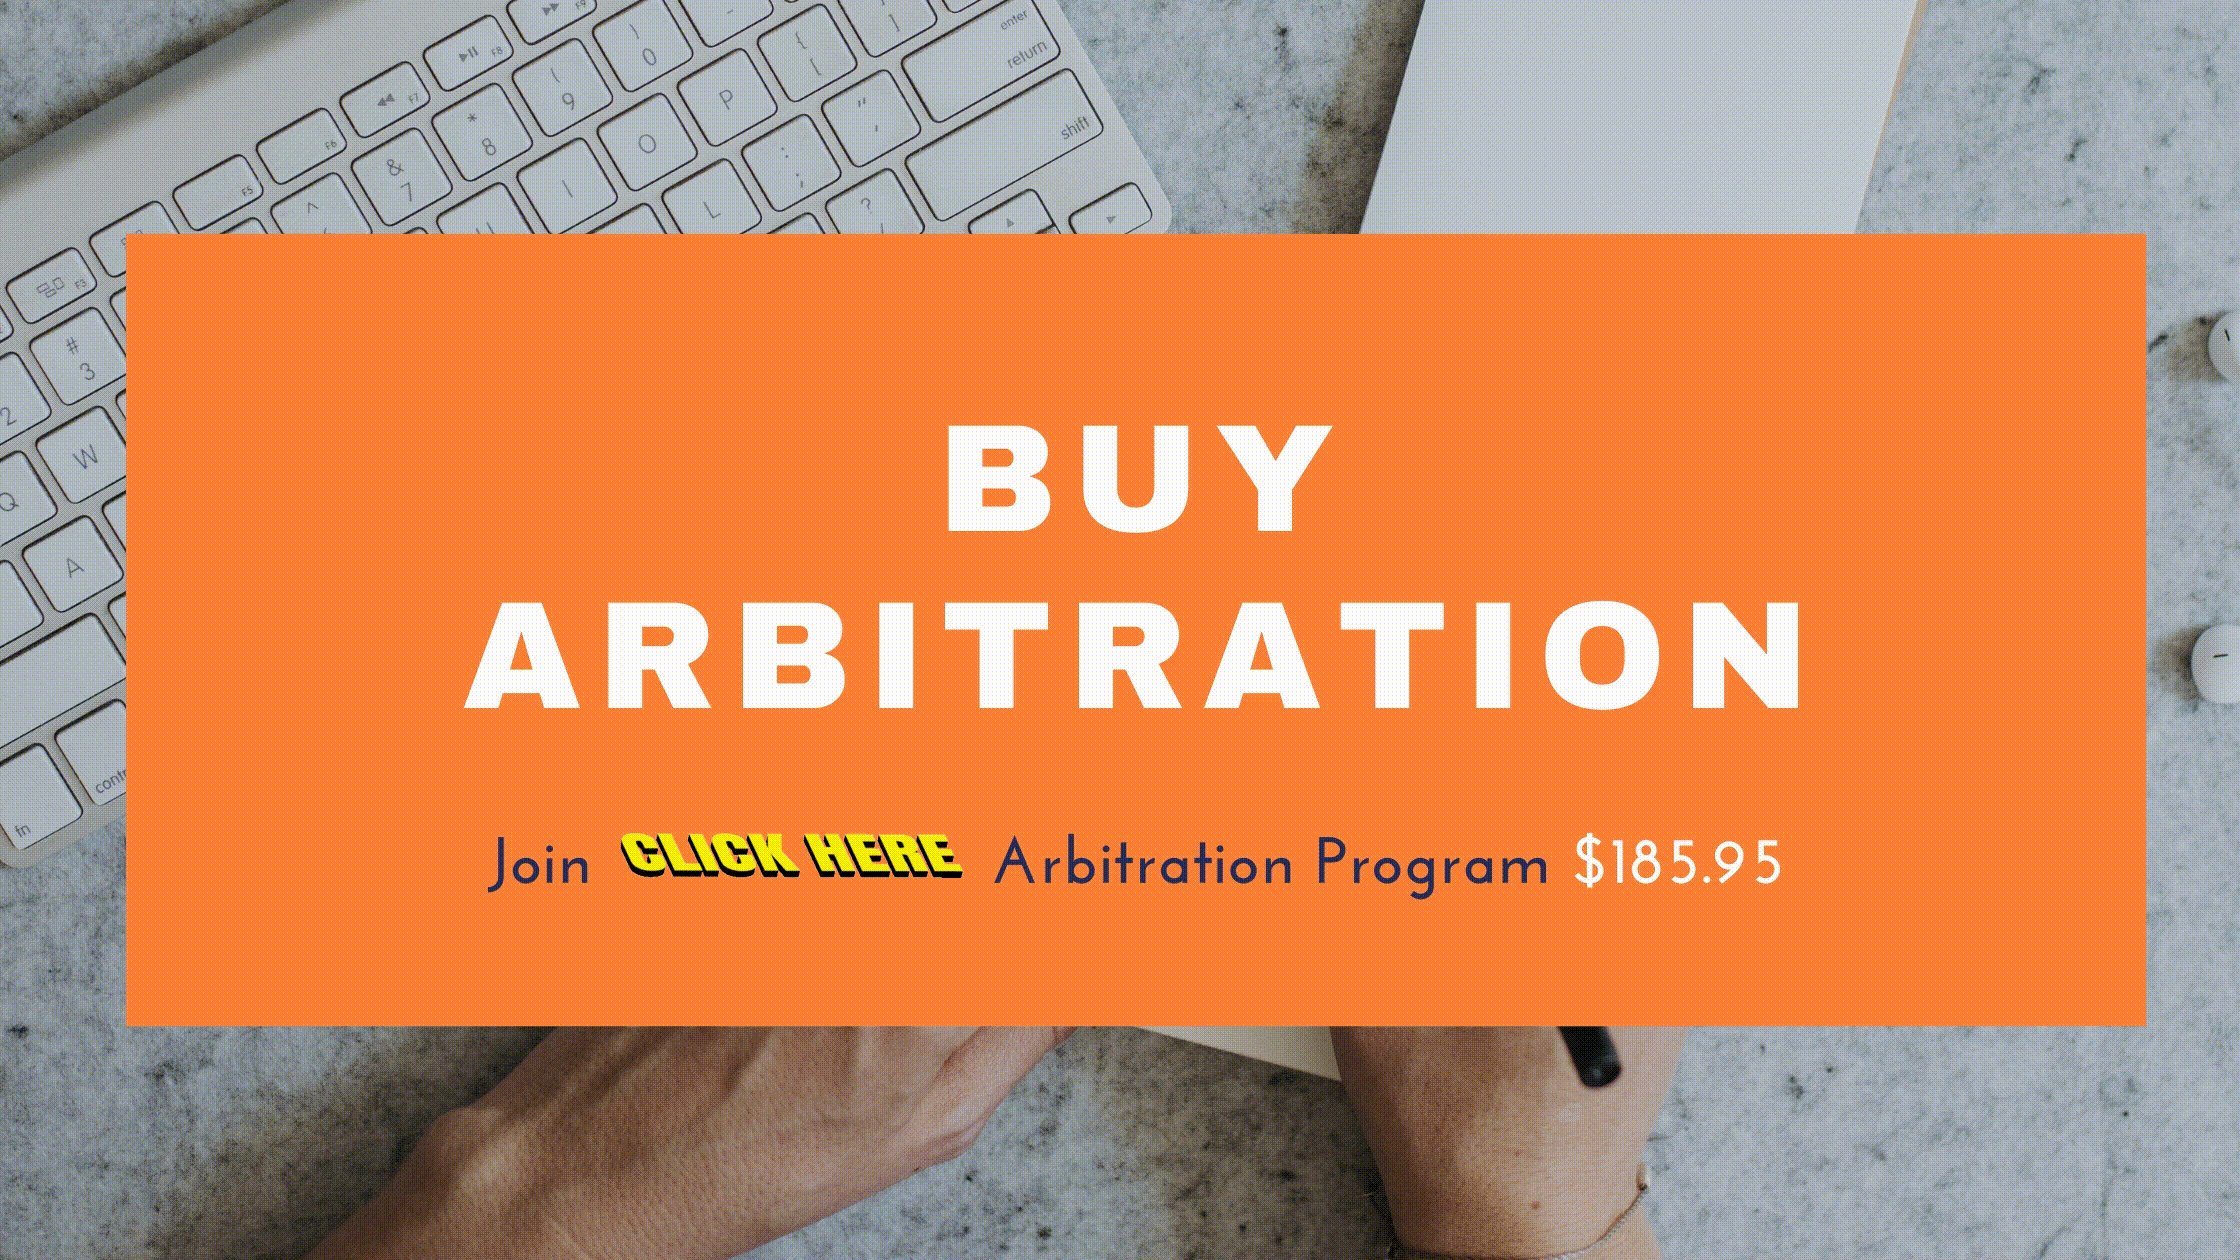 Get arbitration program now